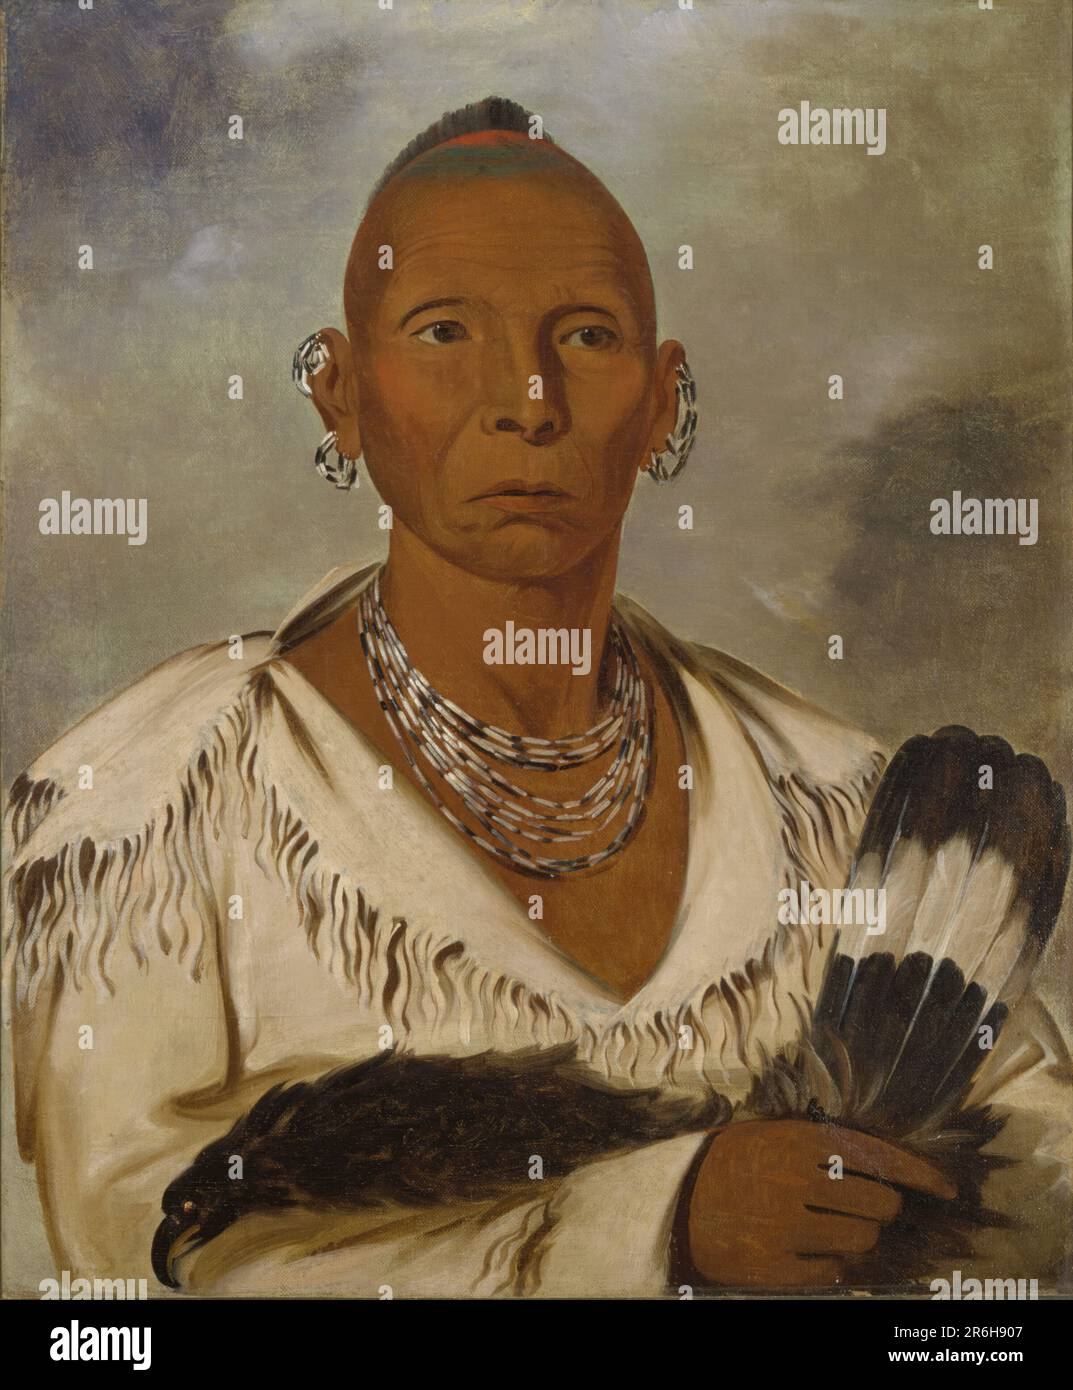 Múk-a-tah-mish-o-káh-kaik, Black Hawk, Prominent Sac Chief. oil on canvas. Date: 1832. Museum: Smithsonian American Art Museum. Stock Photo